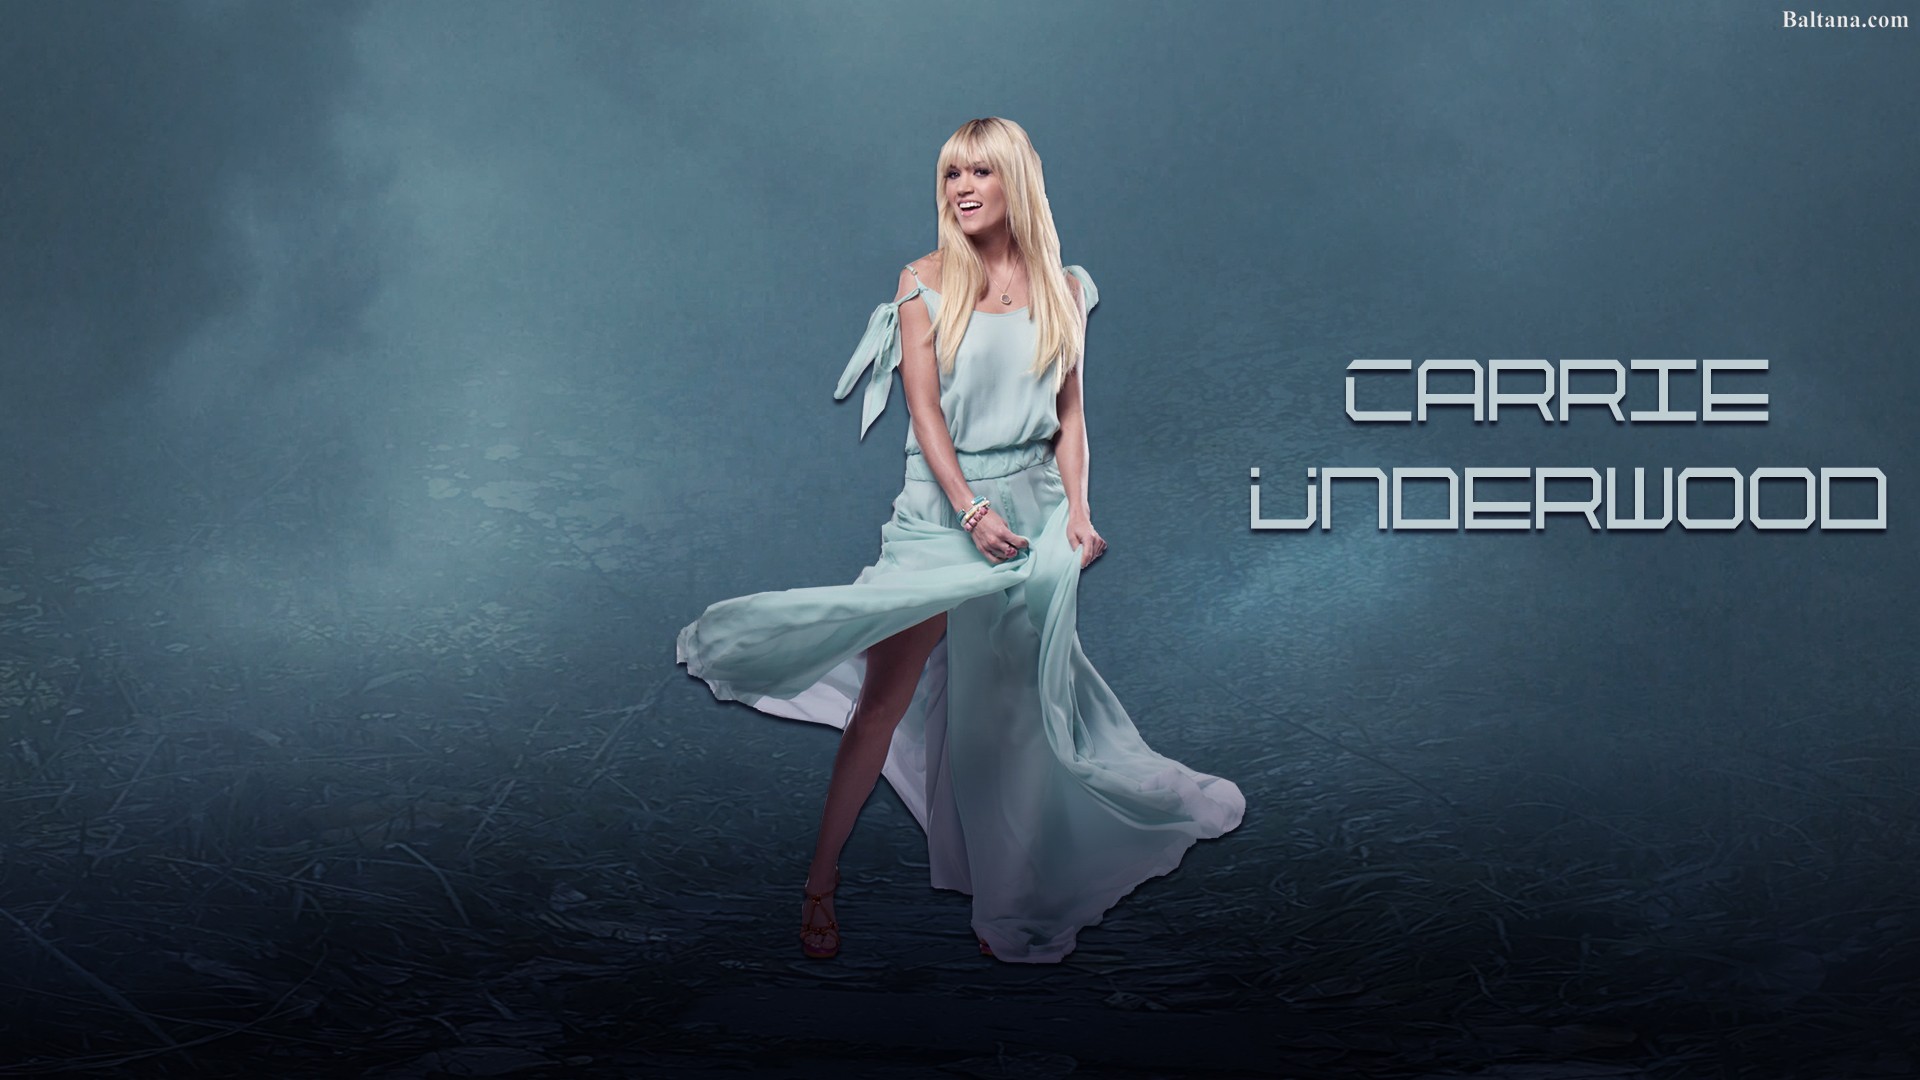 Carrie Underwood HD Desktop Wallpaper 